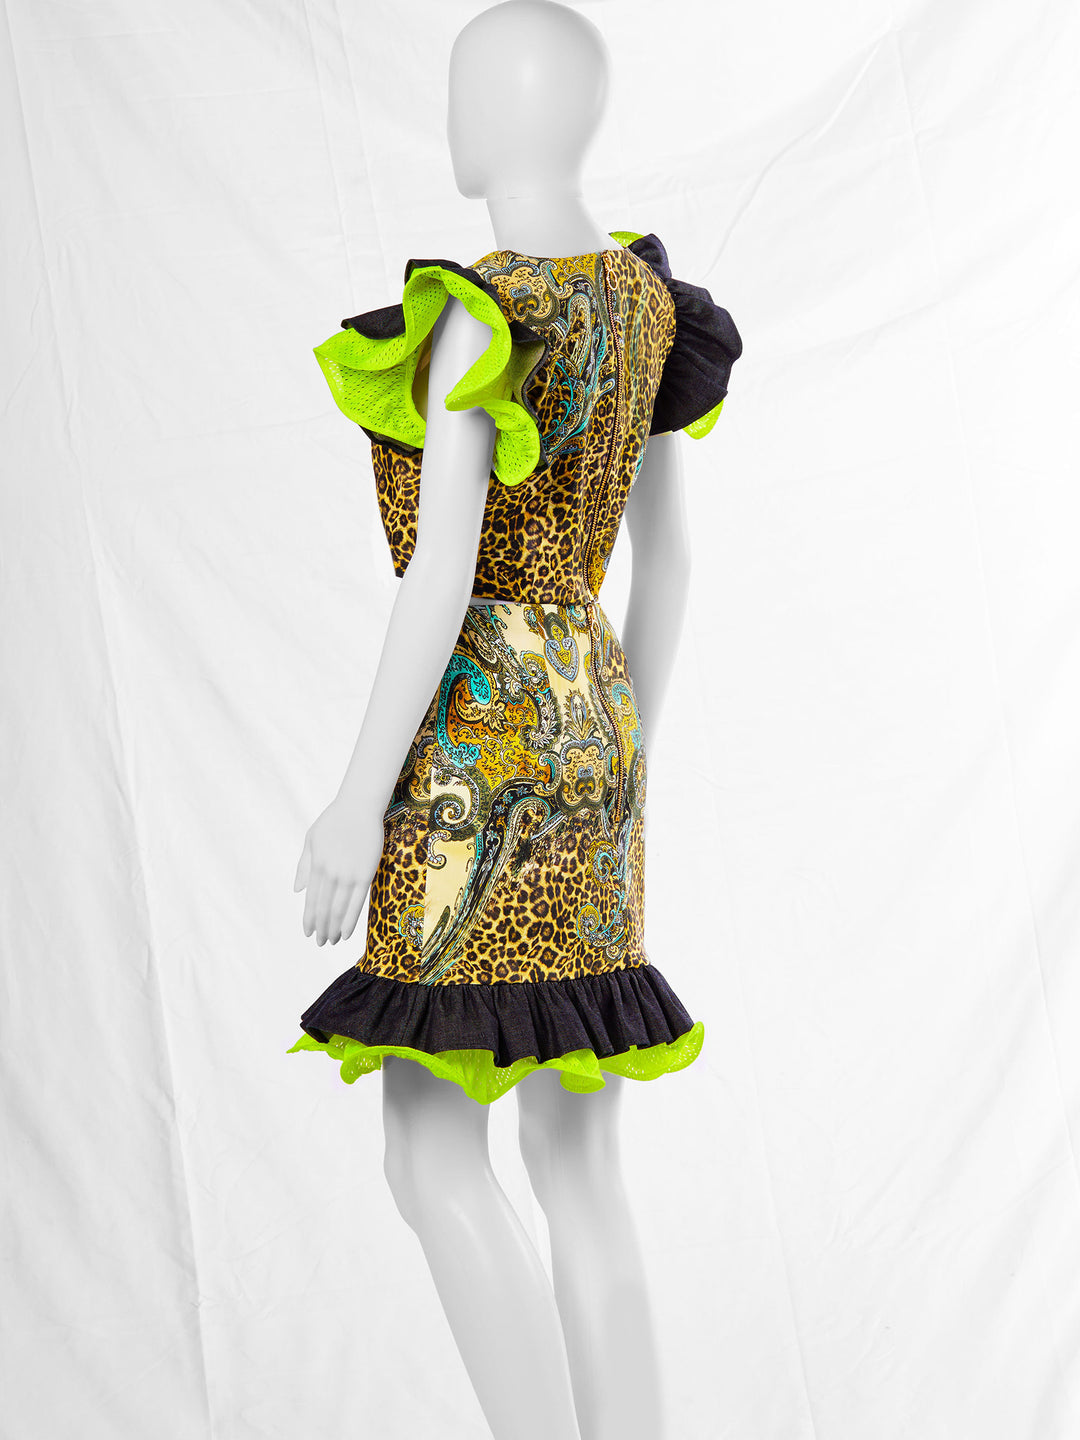 Leopard skirt with neon ruffle and denim ruffle